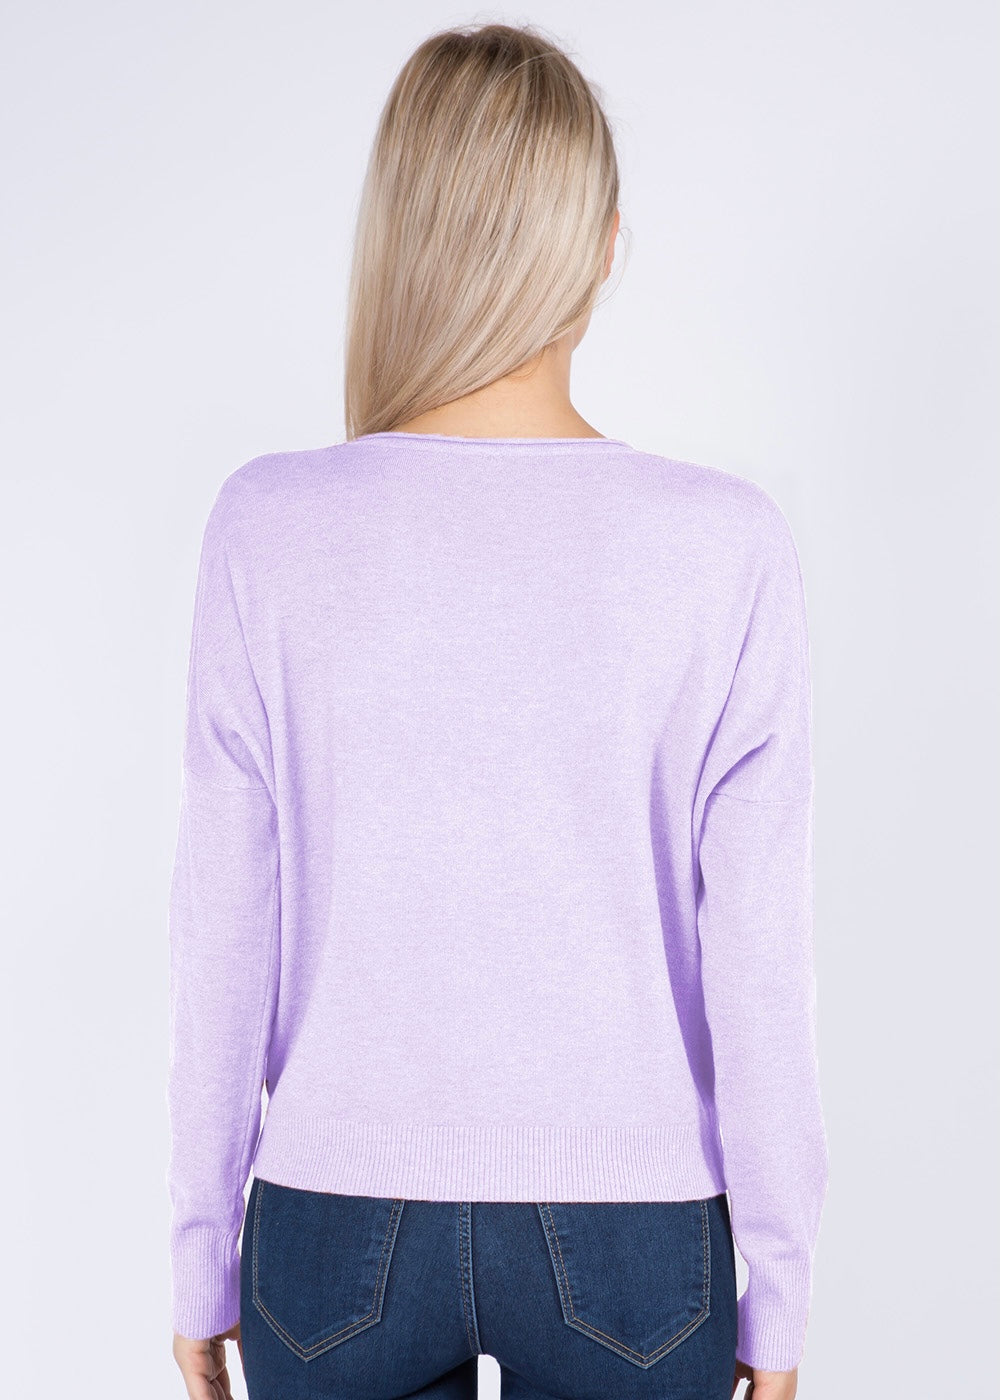 Dreamy Pullover Sweater (Soft Lavender)